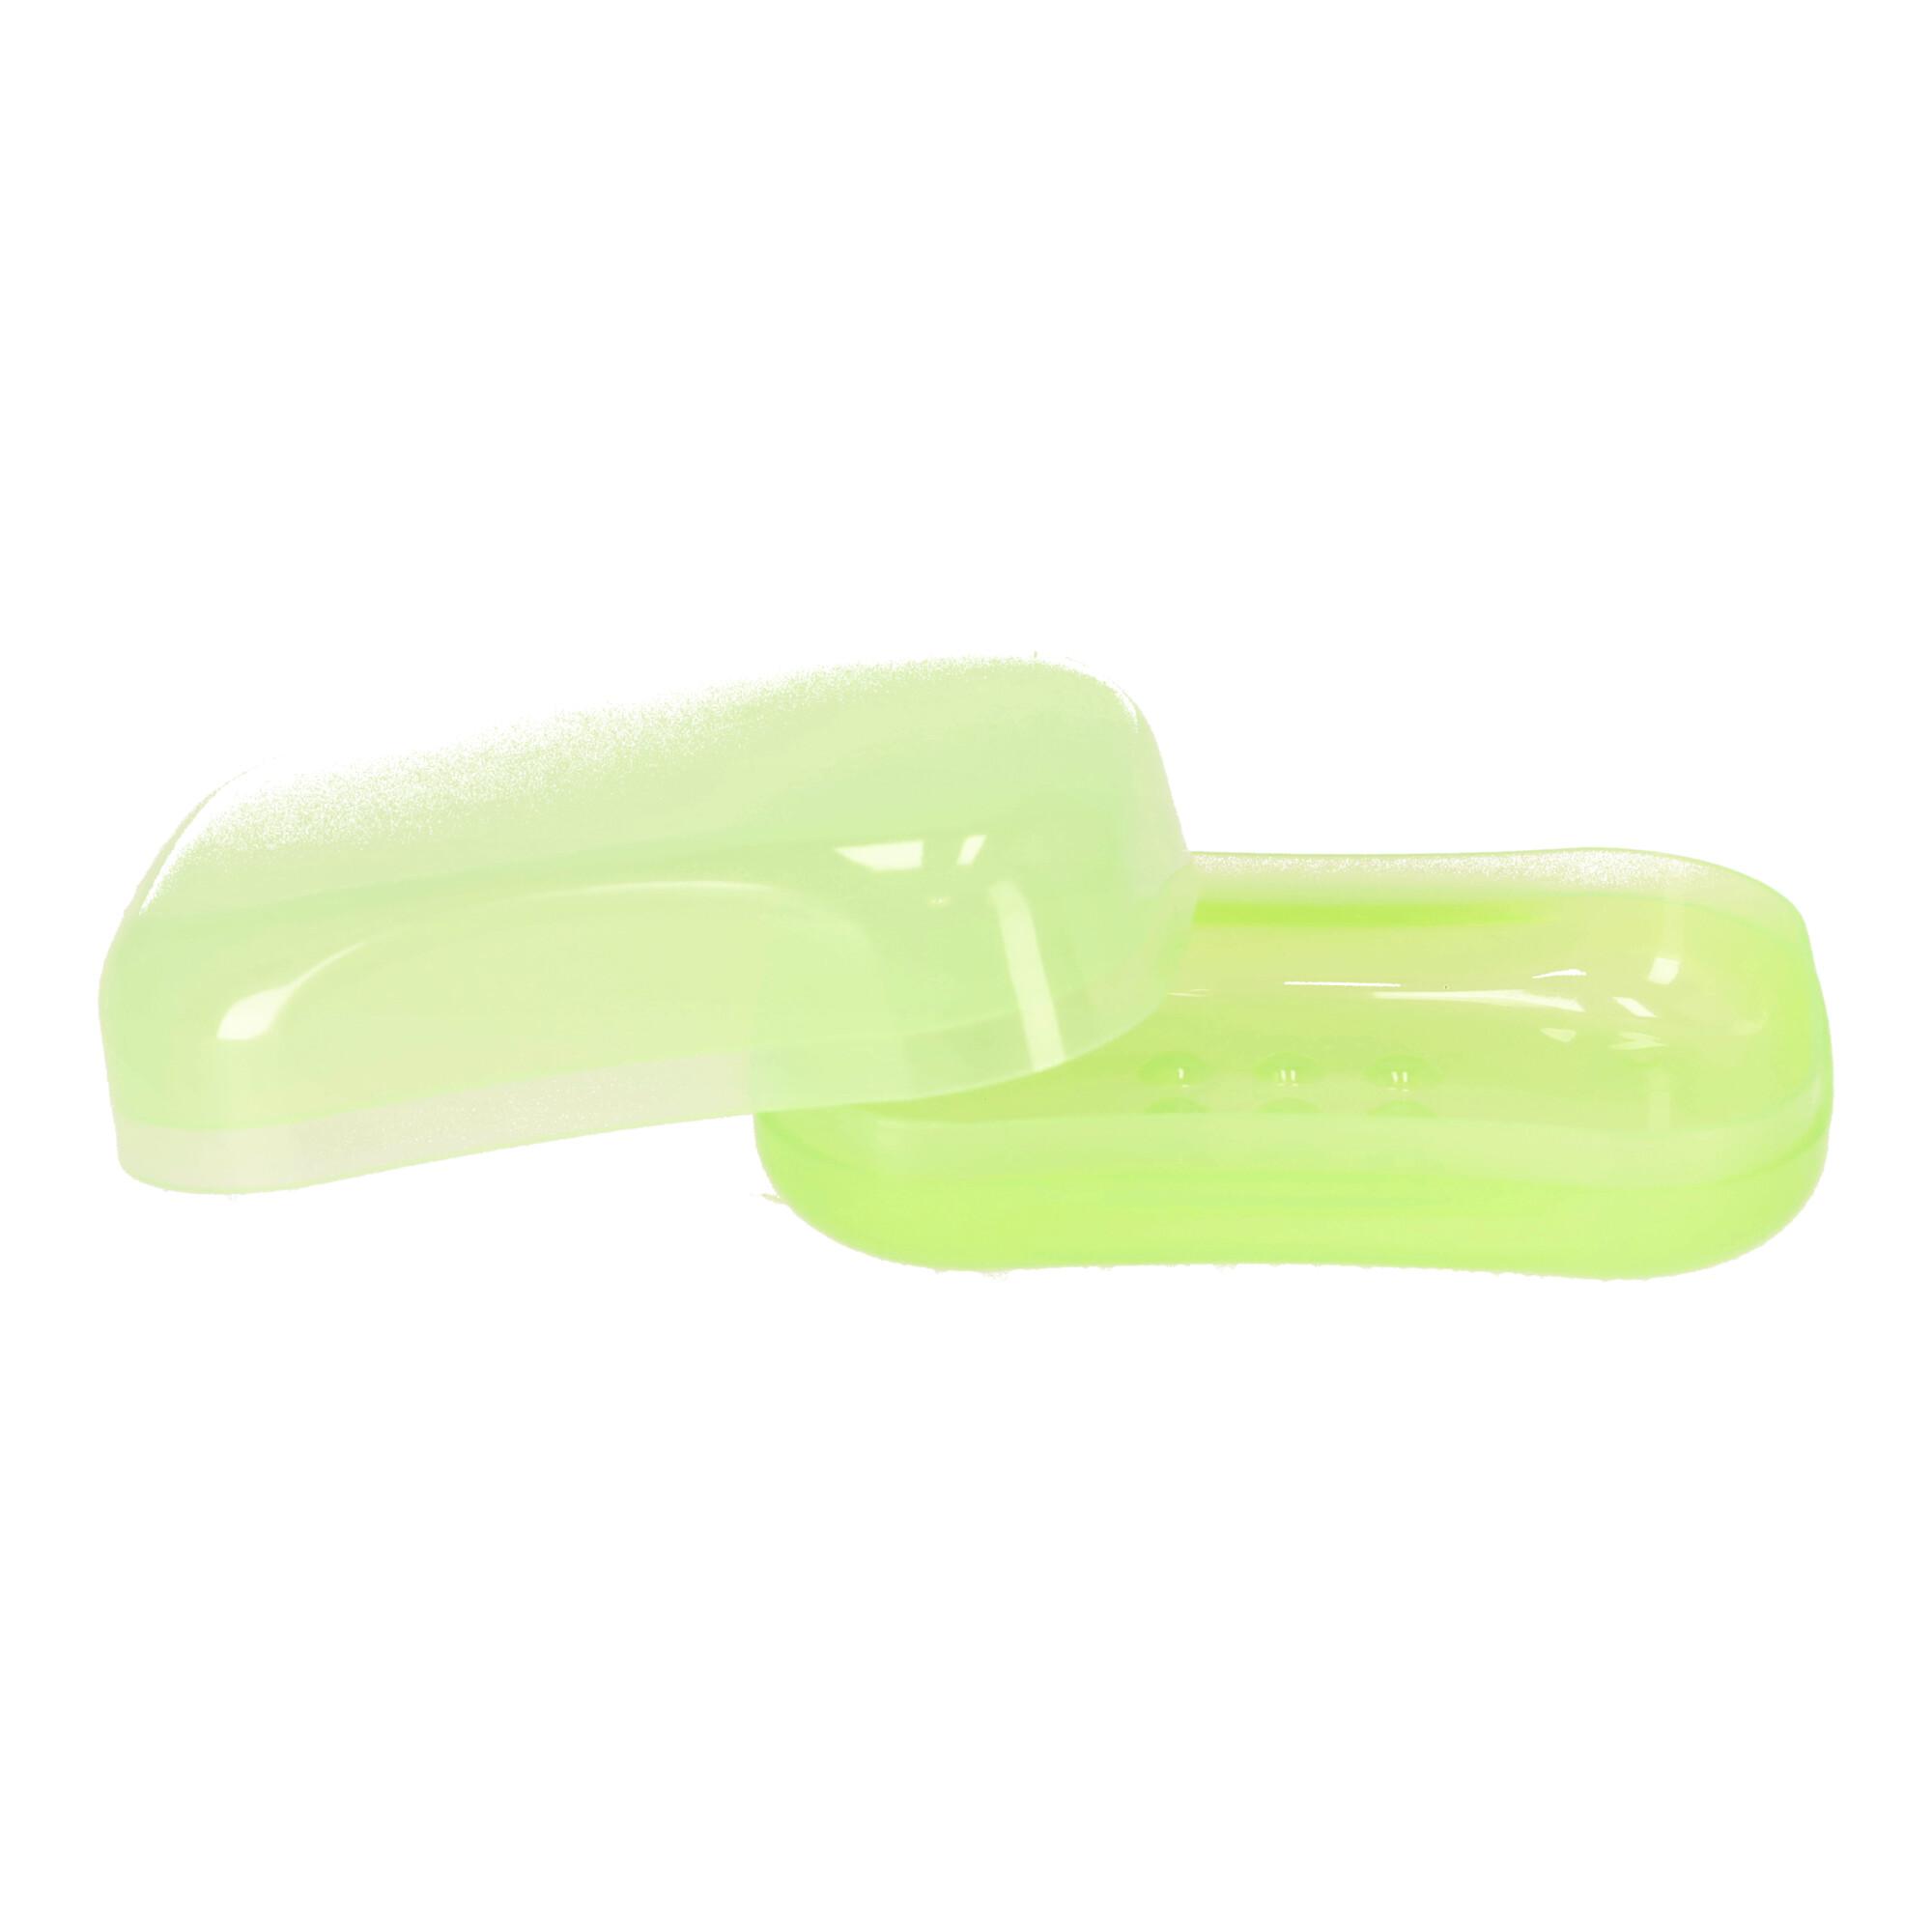 Tourist soap dish, closed plastic soap dish, type III - light green